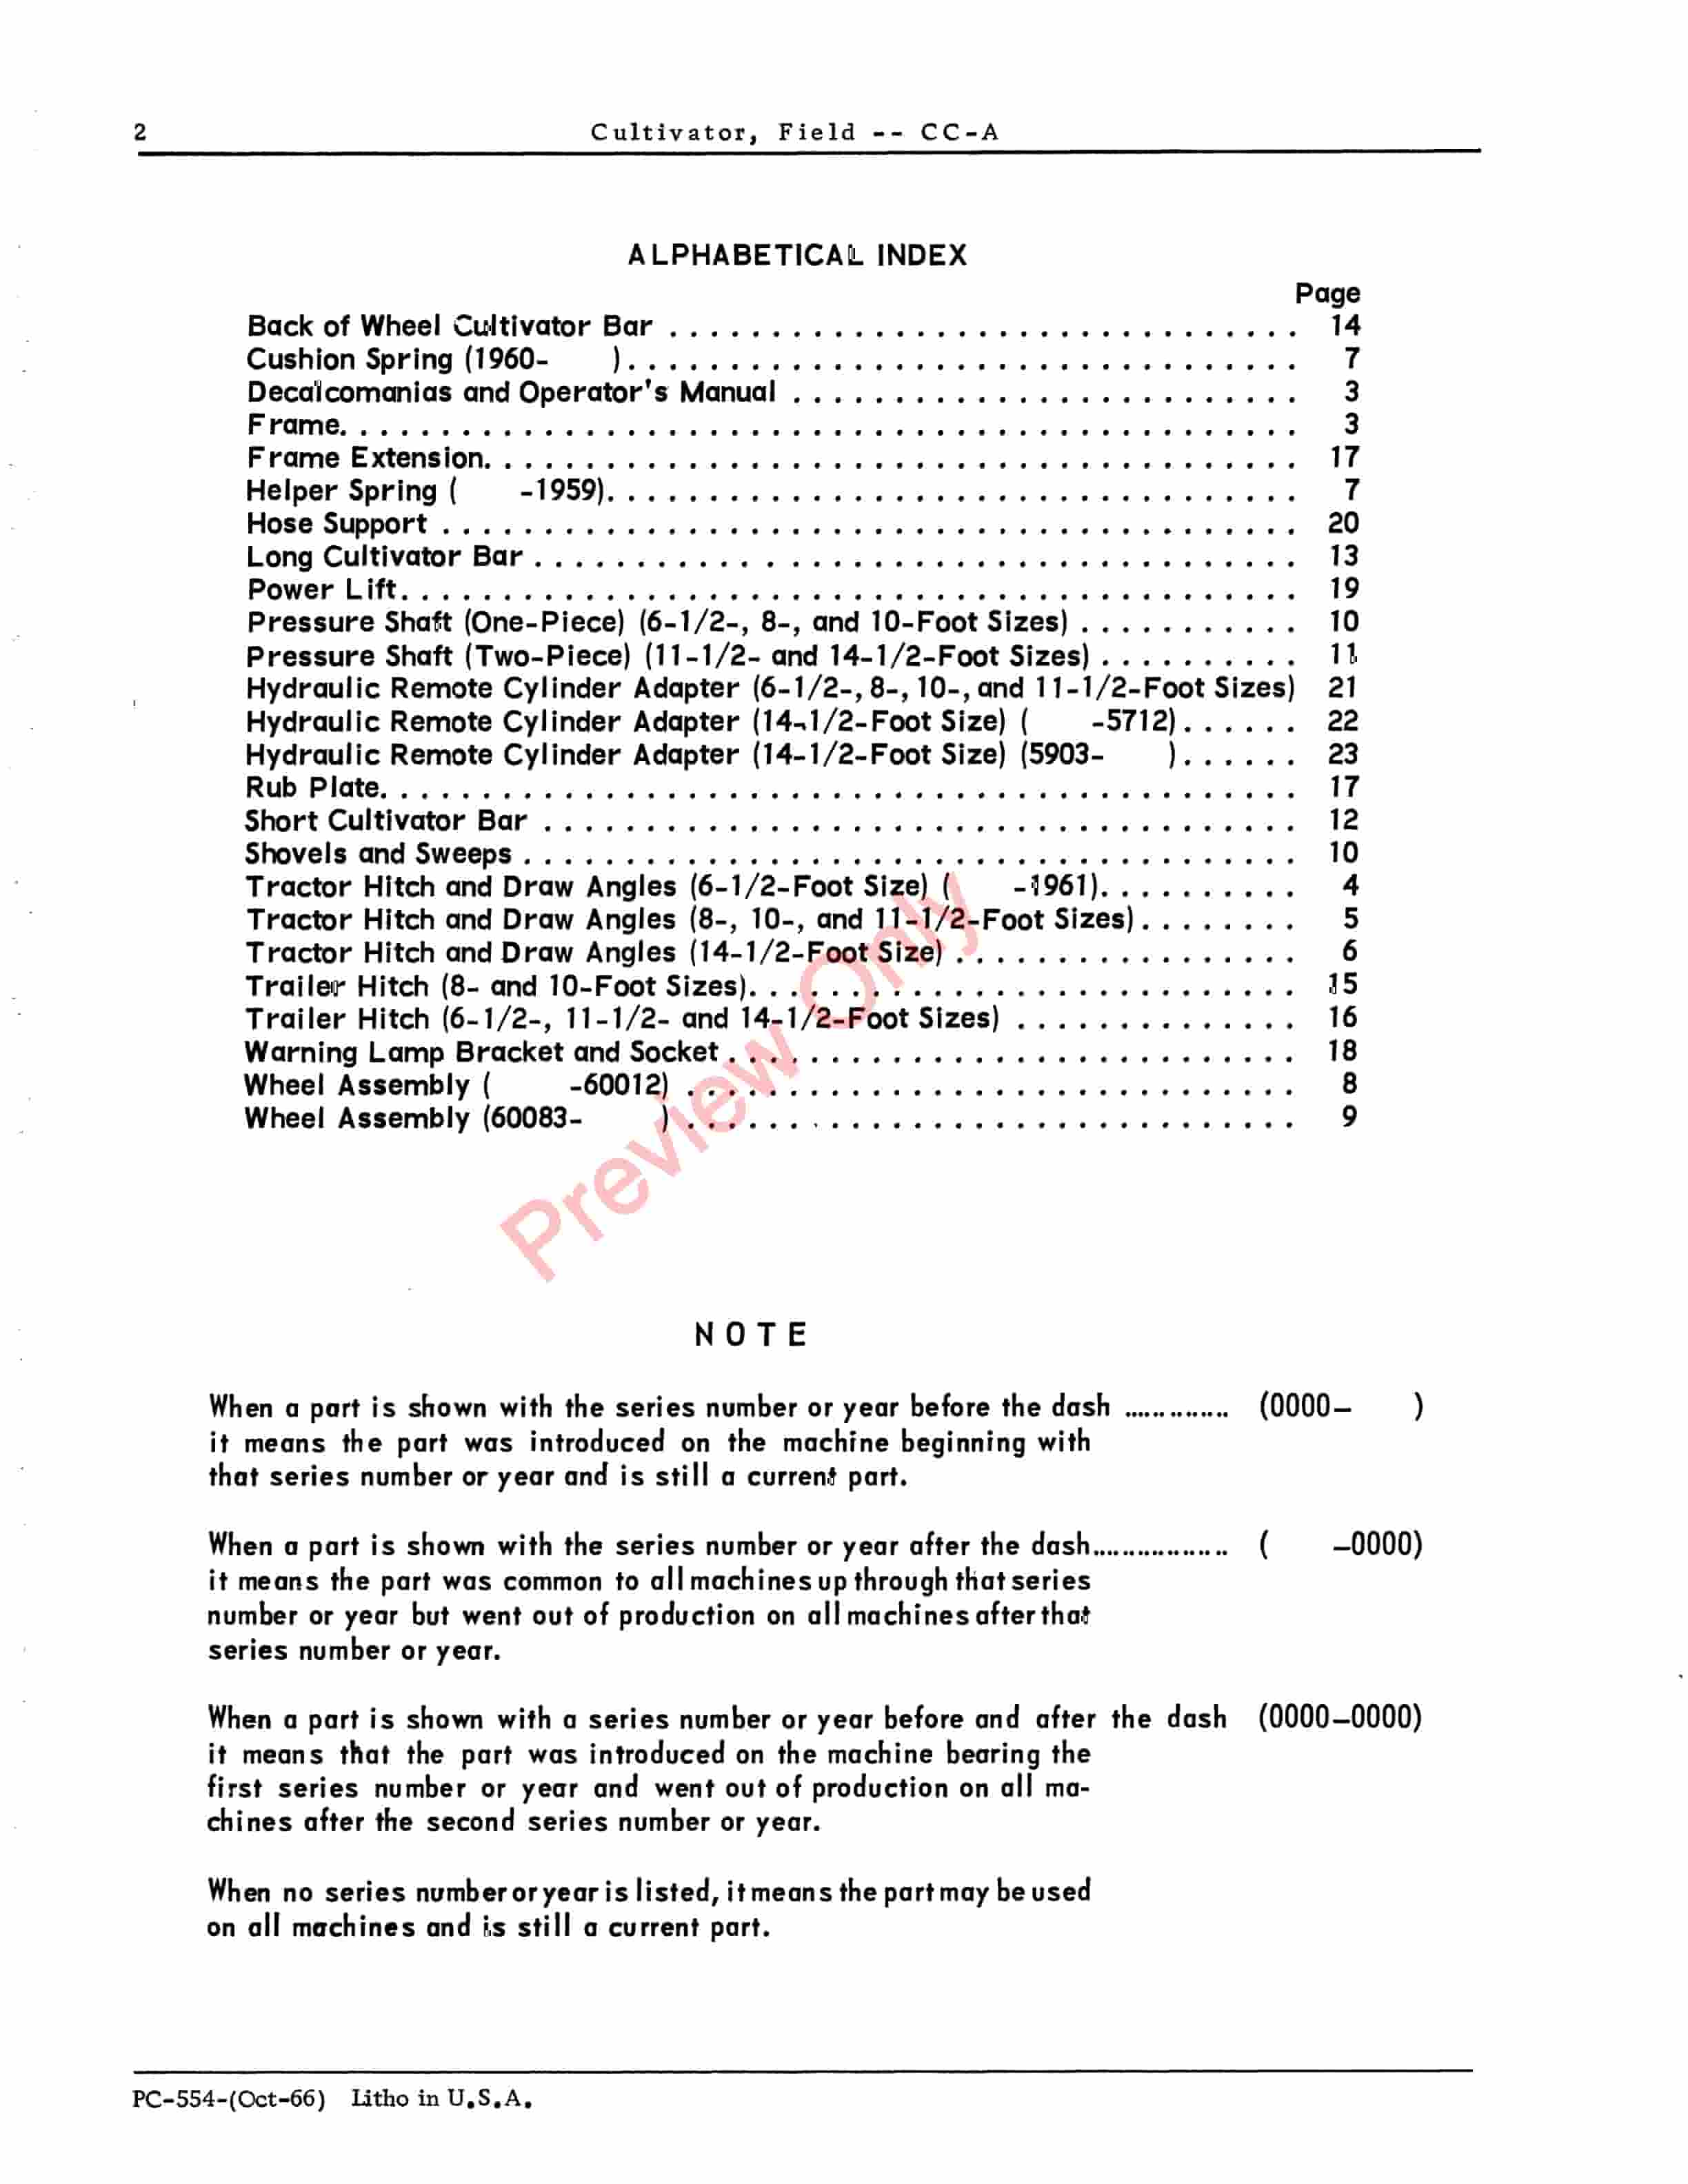 John Deere Field Cultivator – Model CC-A Parts Catalog PC554 01OCT65-4